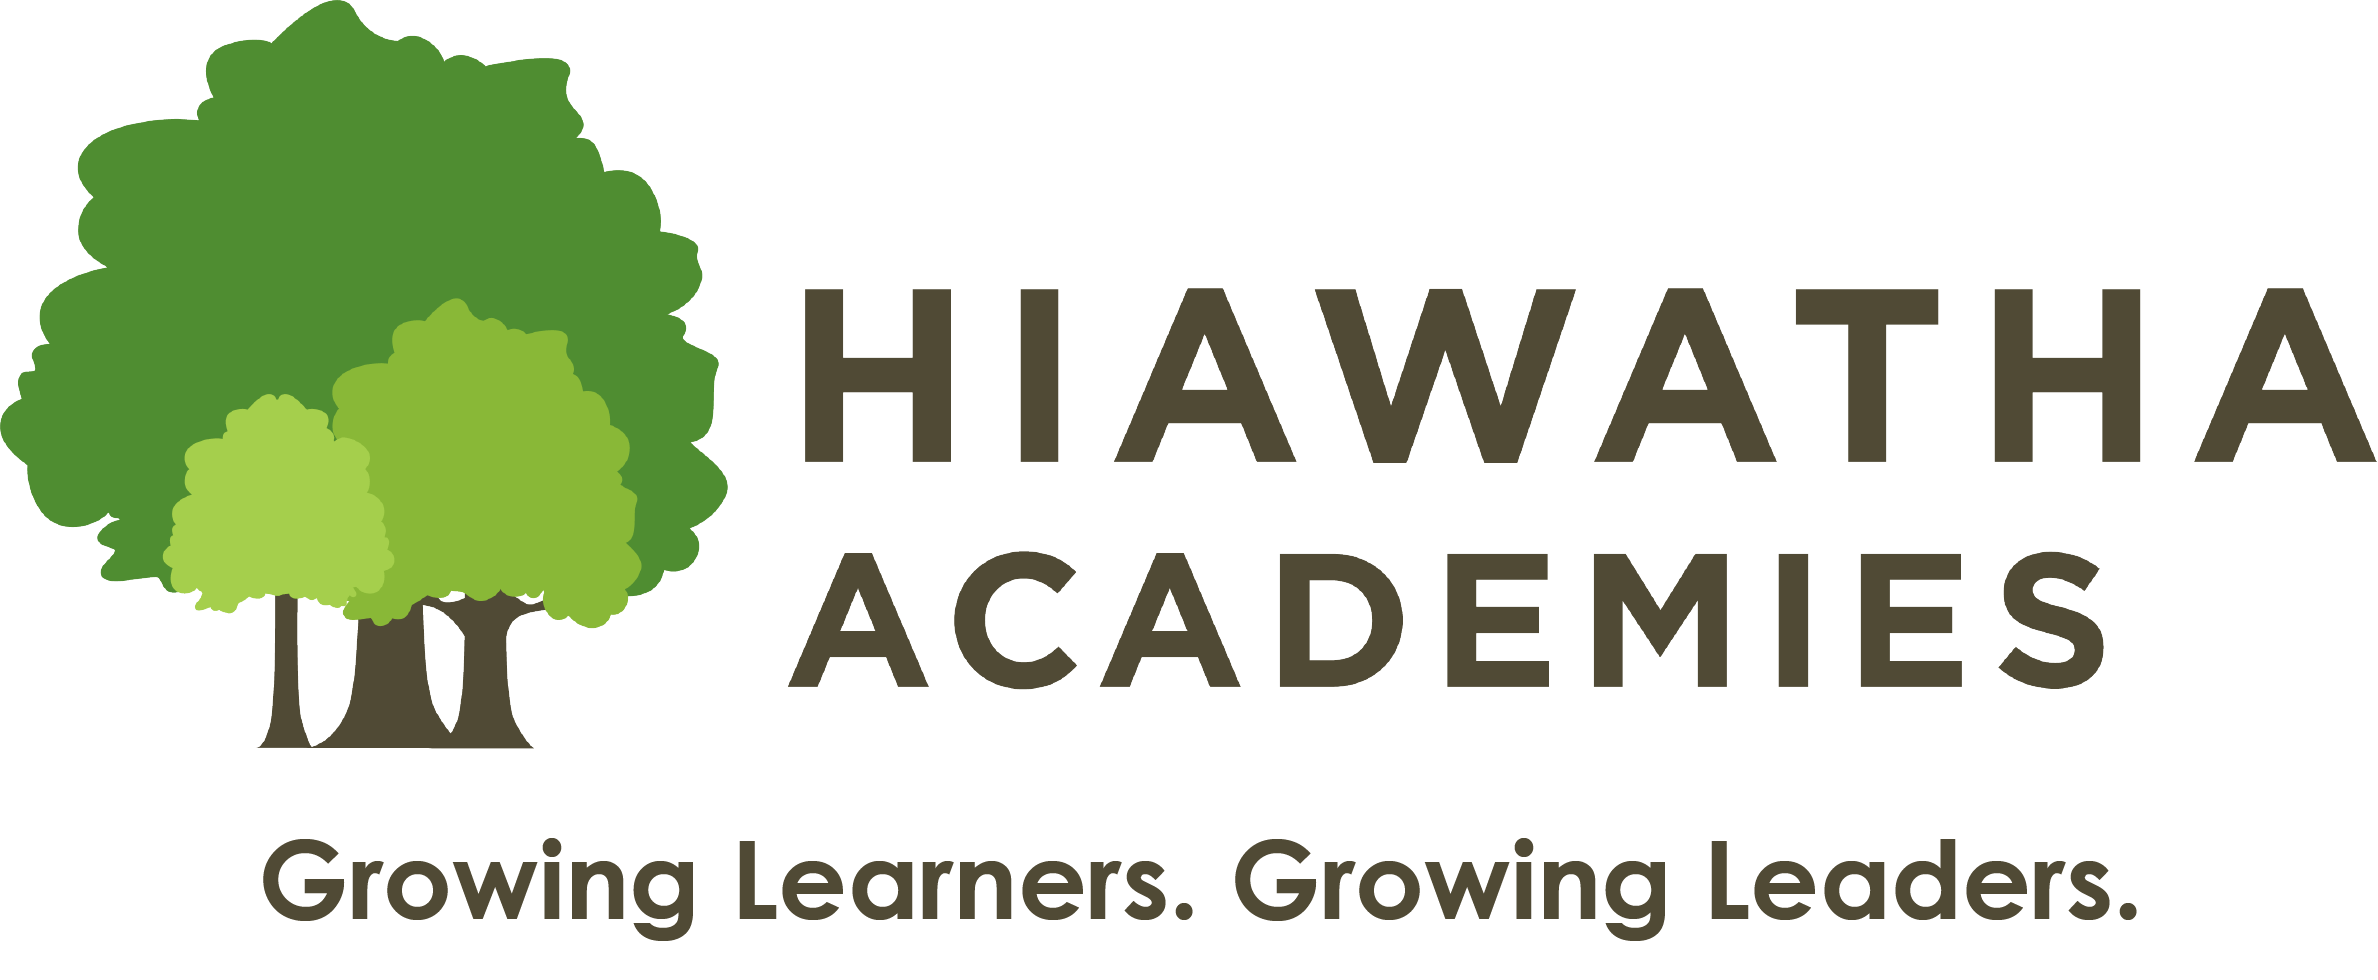 Hiawatha Academies logo